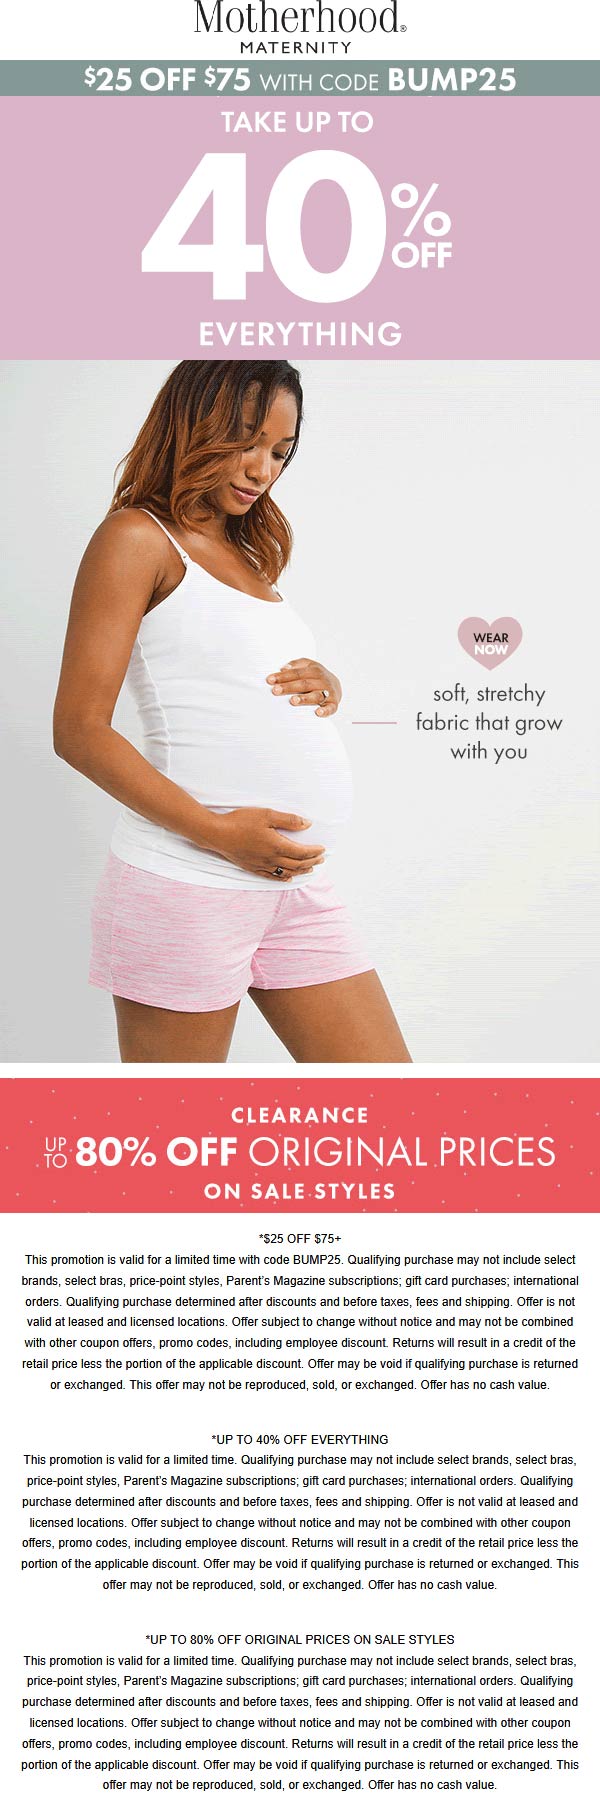 Motherhood stores Coupon  $25 off $75 & more today at Motherhood Maternity via promo code BUMP25 #motherhood 